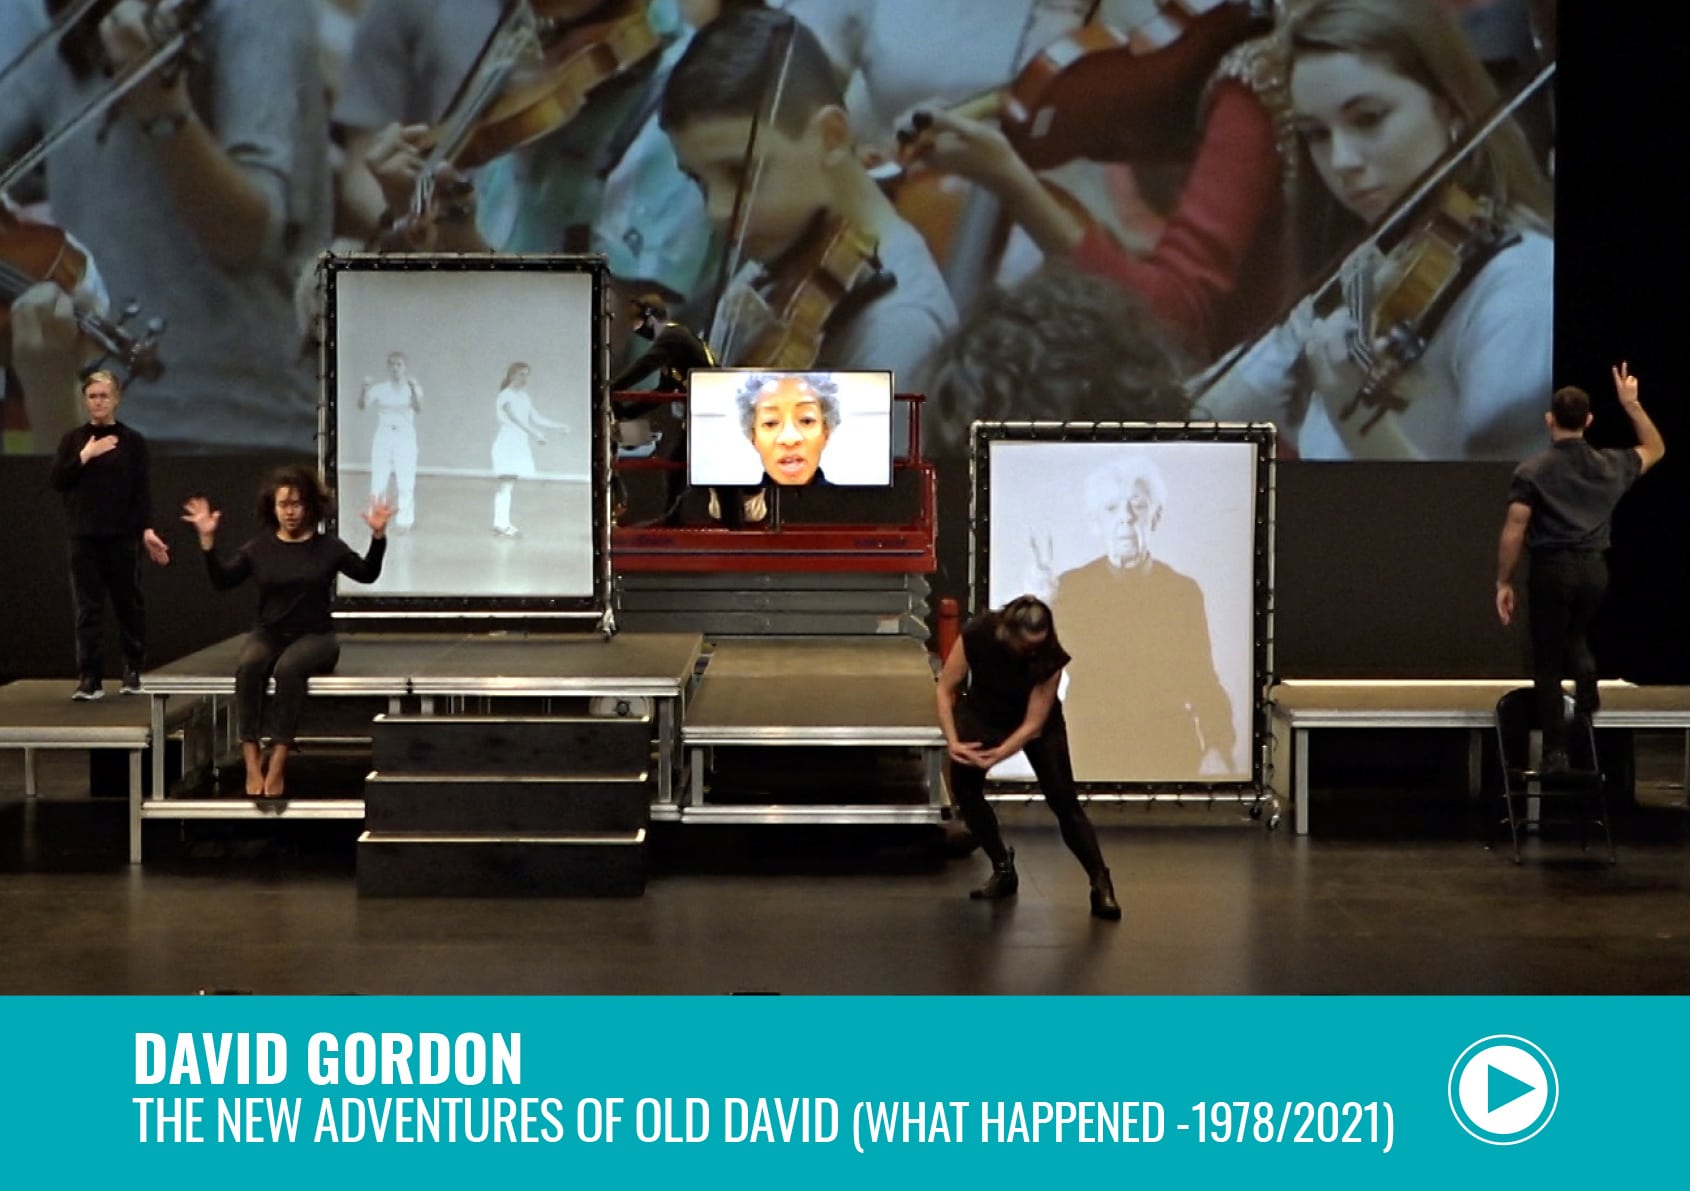 david gordon The New Adventures of Old David